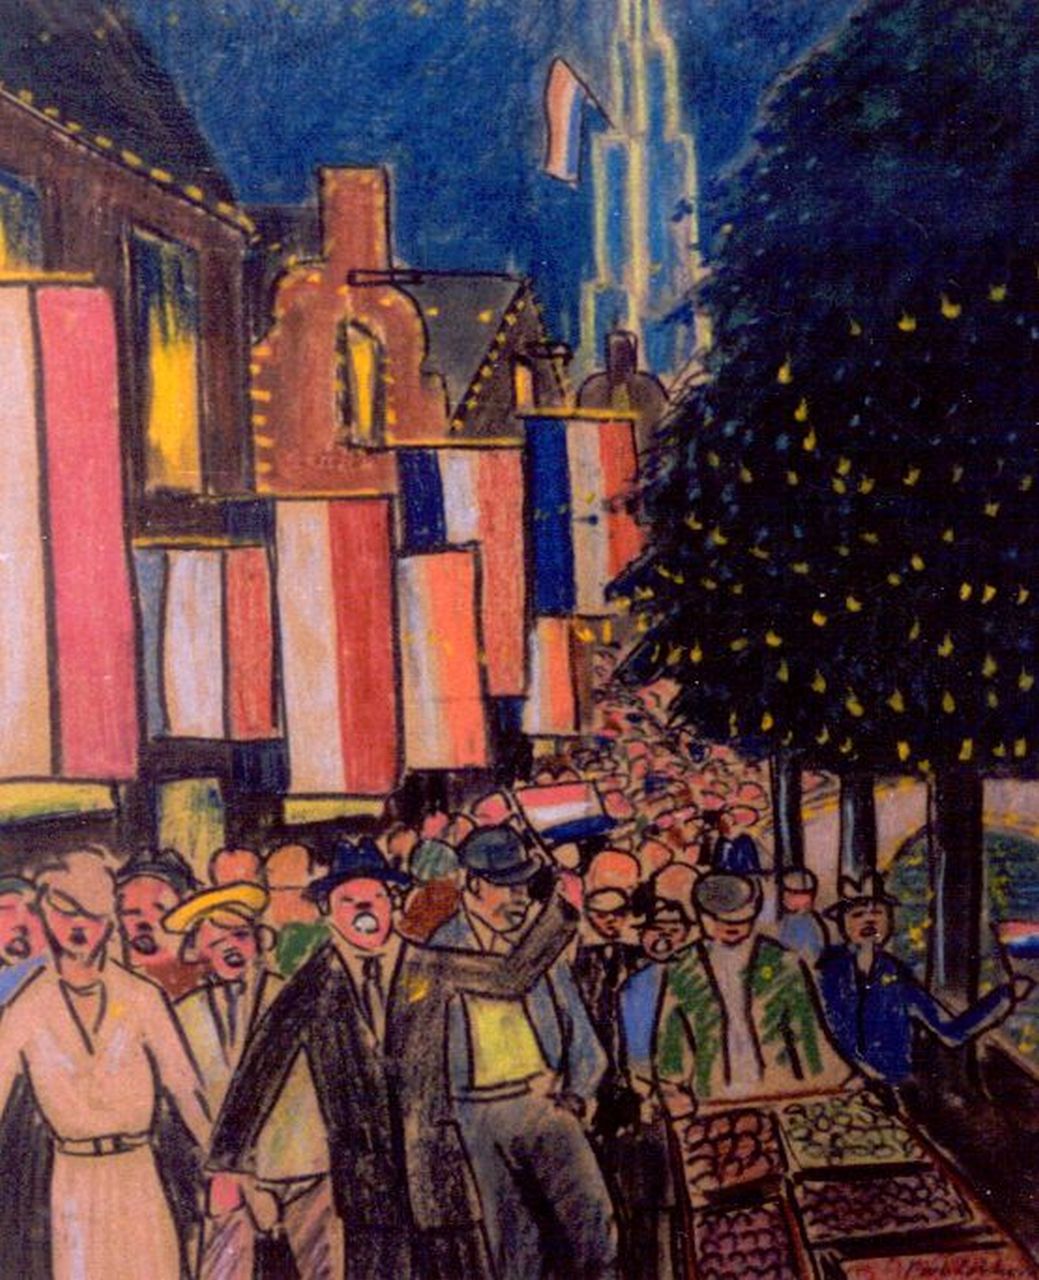 Lokhorst W.F.  | Willem Frederik 'Bob' Lokhorst, Kroningsfeesten Amsterdam 1948, gekleurd krijt op papier 31,0 x 24,8 cm, gesigneerd rechtsonder en gedateerd 1948